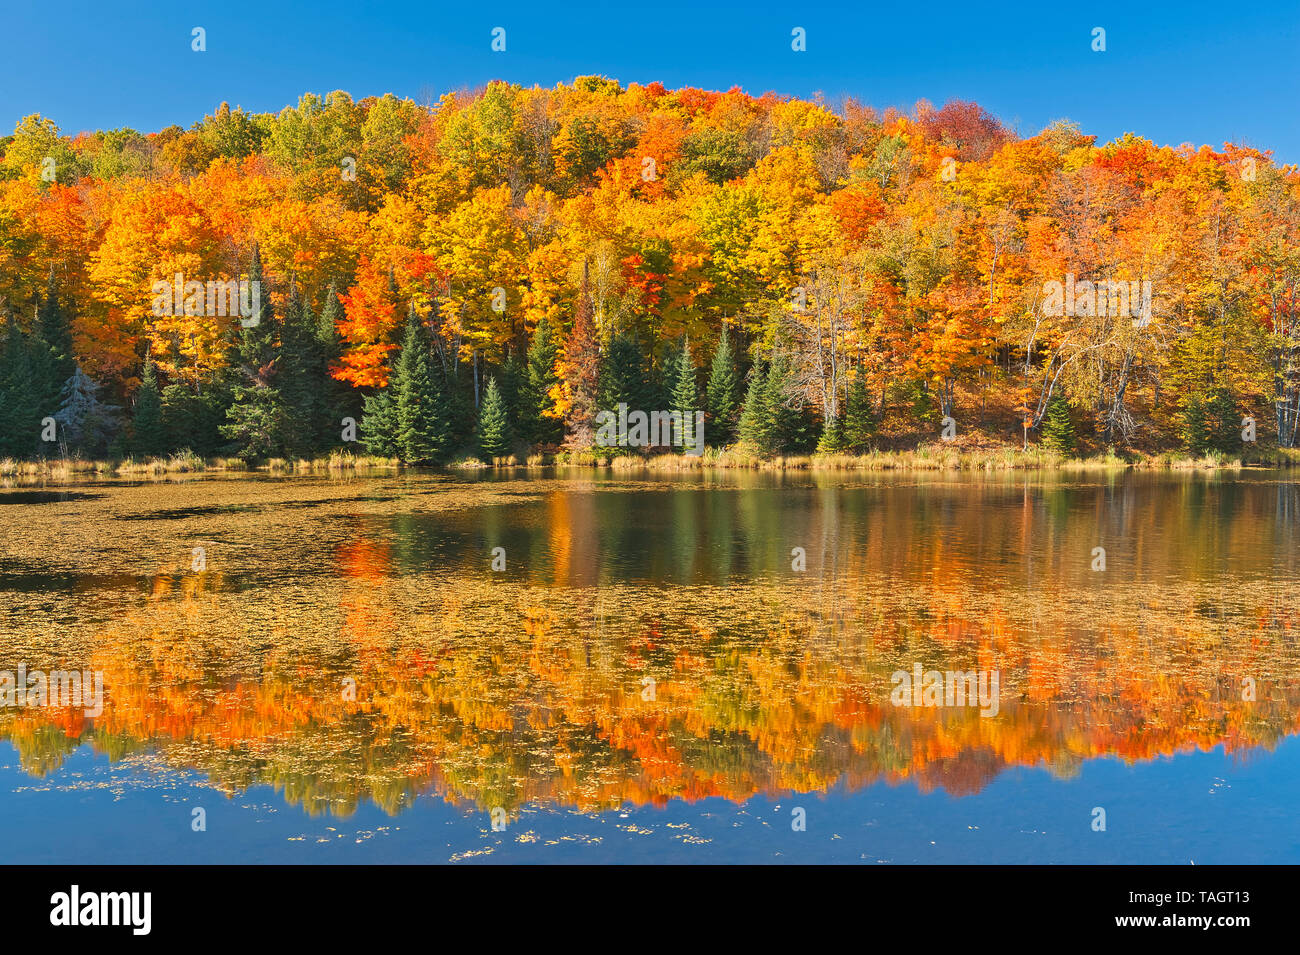 Deciduous forest in autumn colors on shore of Paudash Lake, Paudash Lake, Ontario, Canada Stock Photo